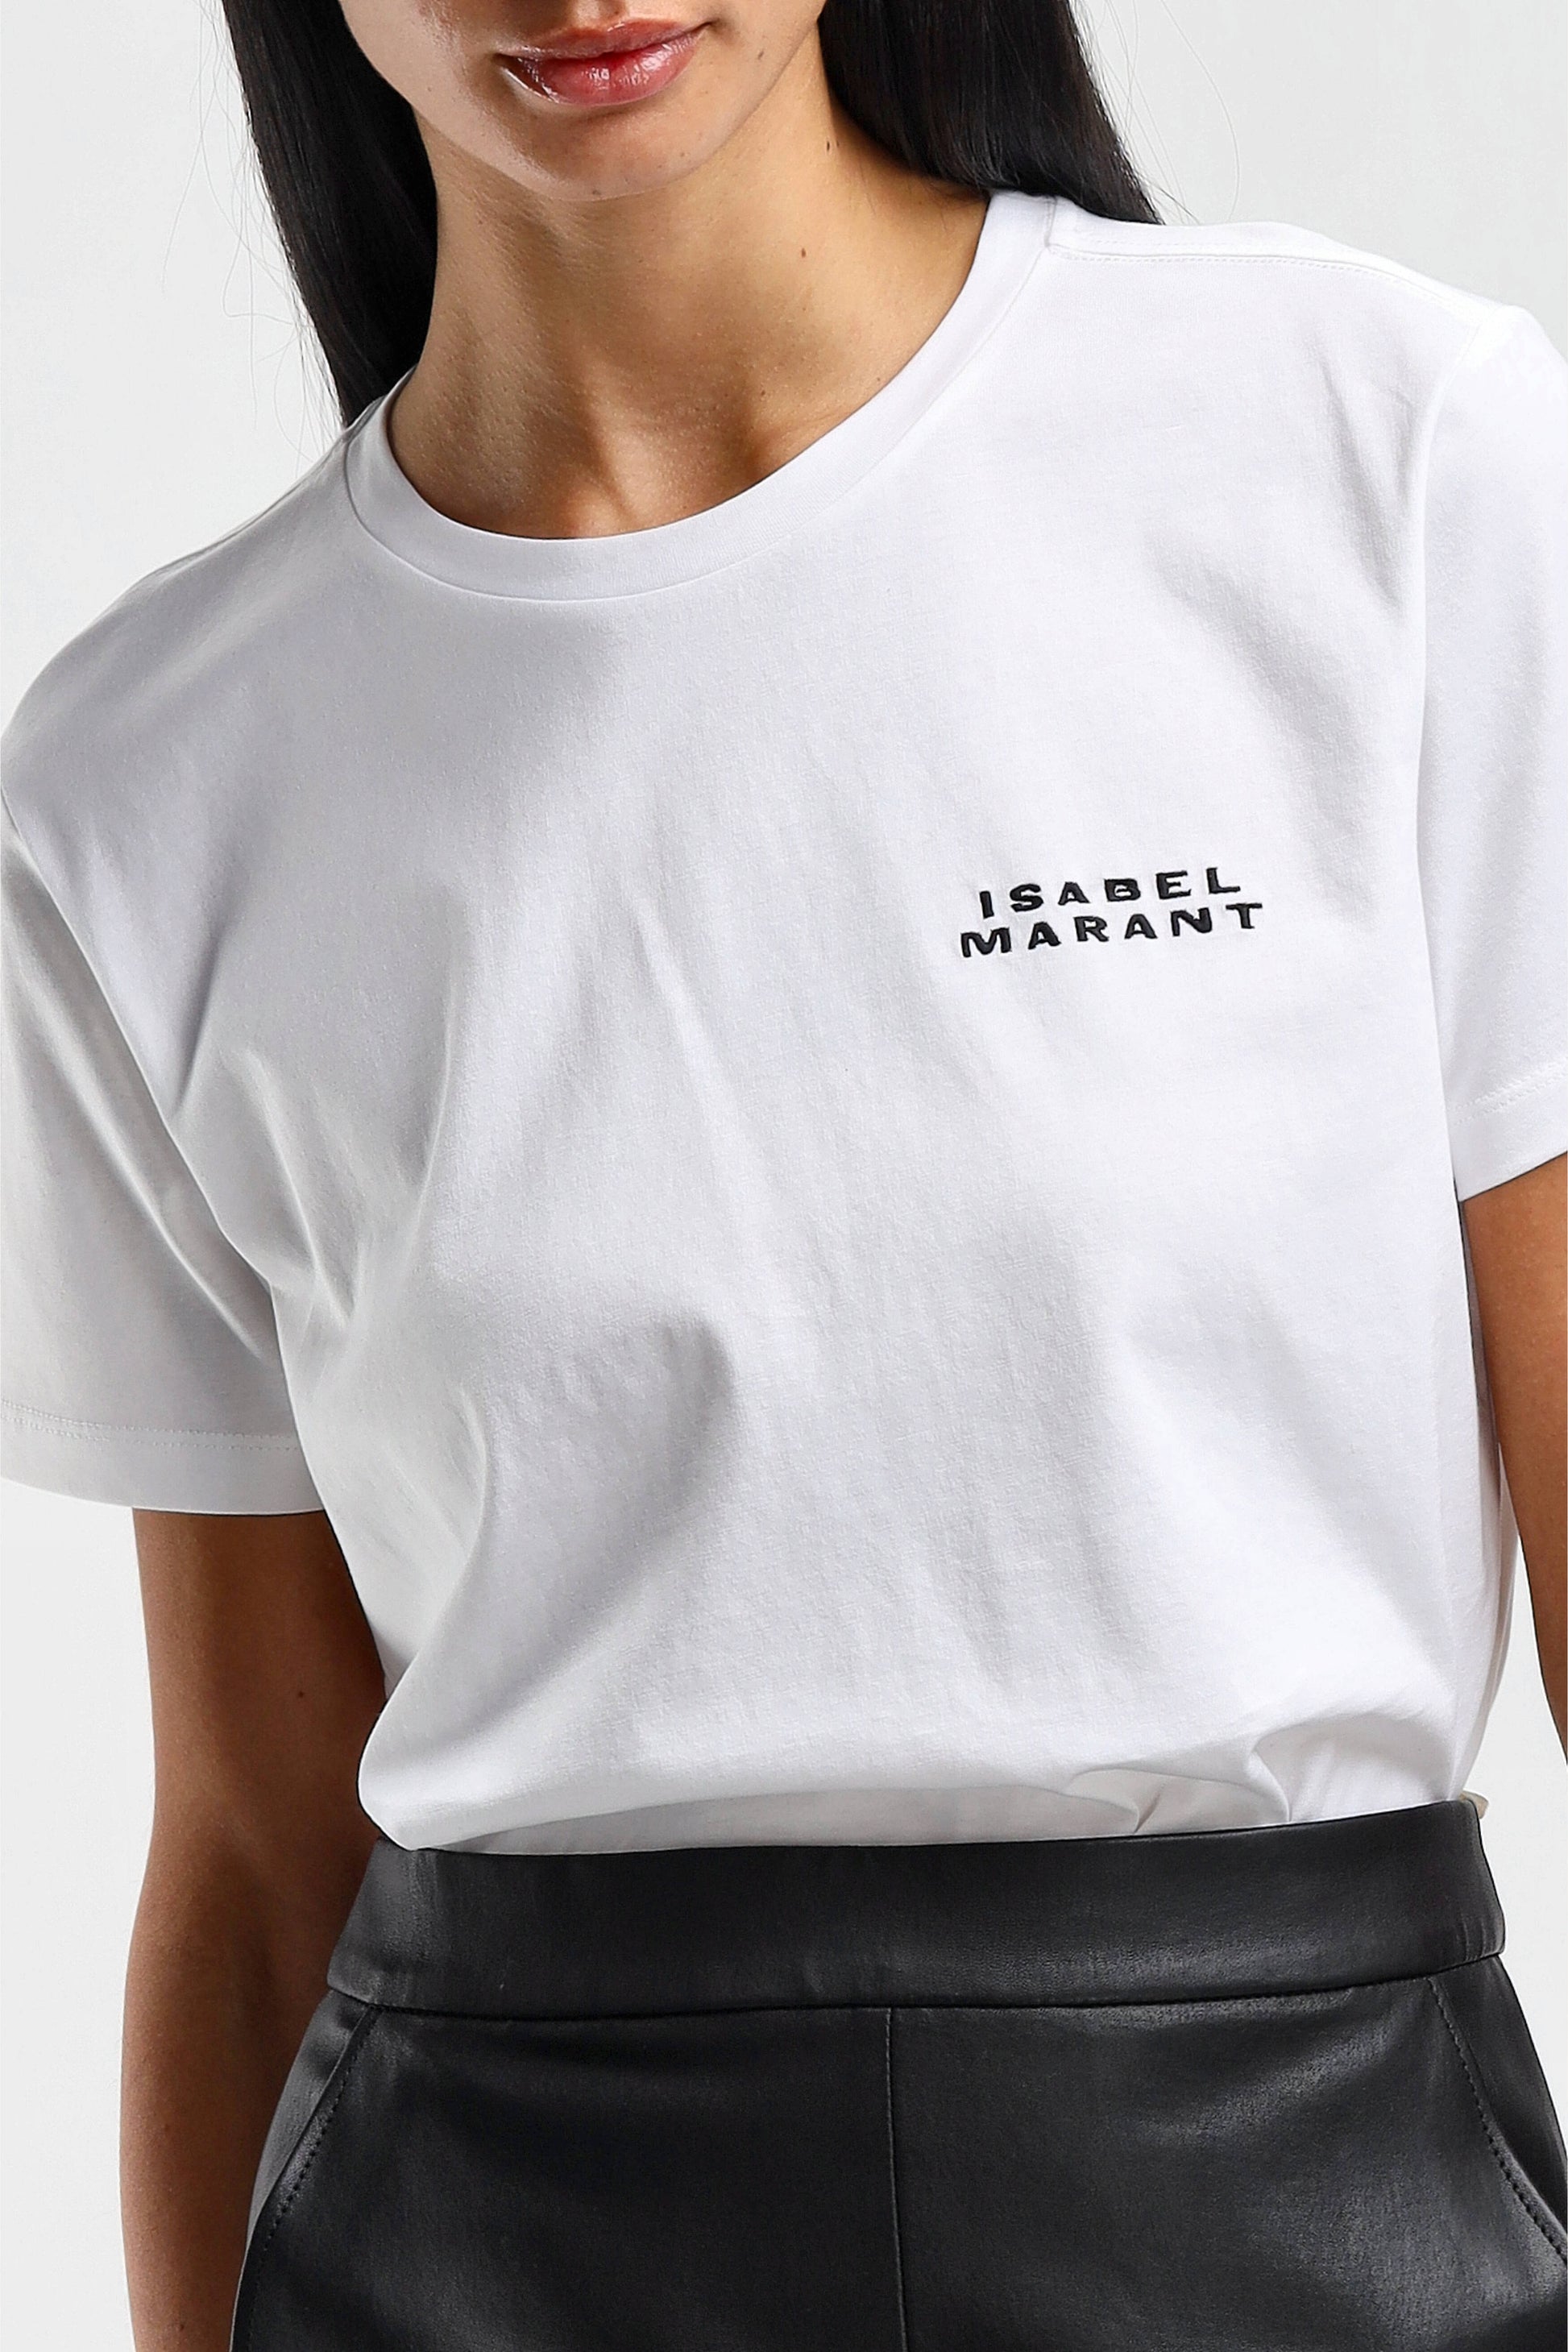 T-Shirt Vidal in WeißIsabel Marant - Anita Hass